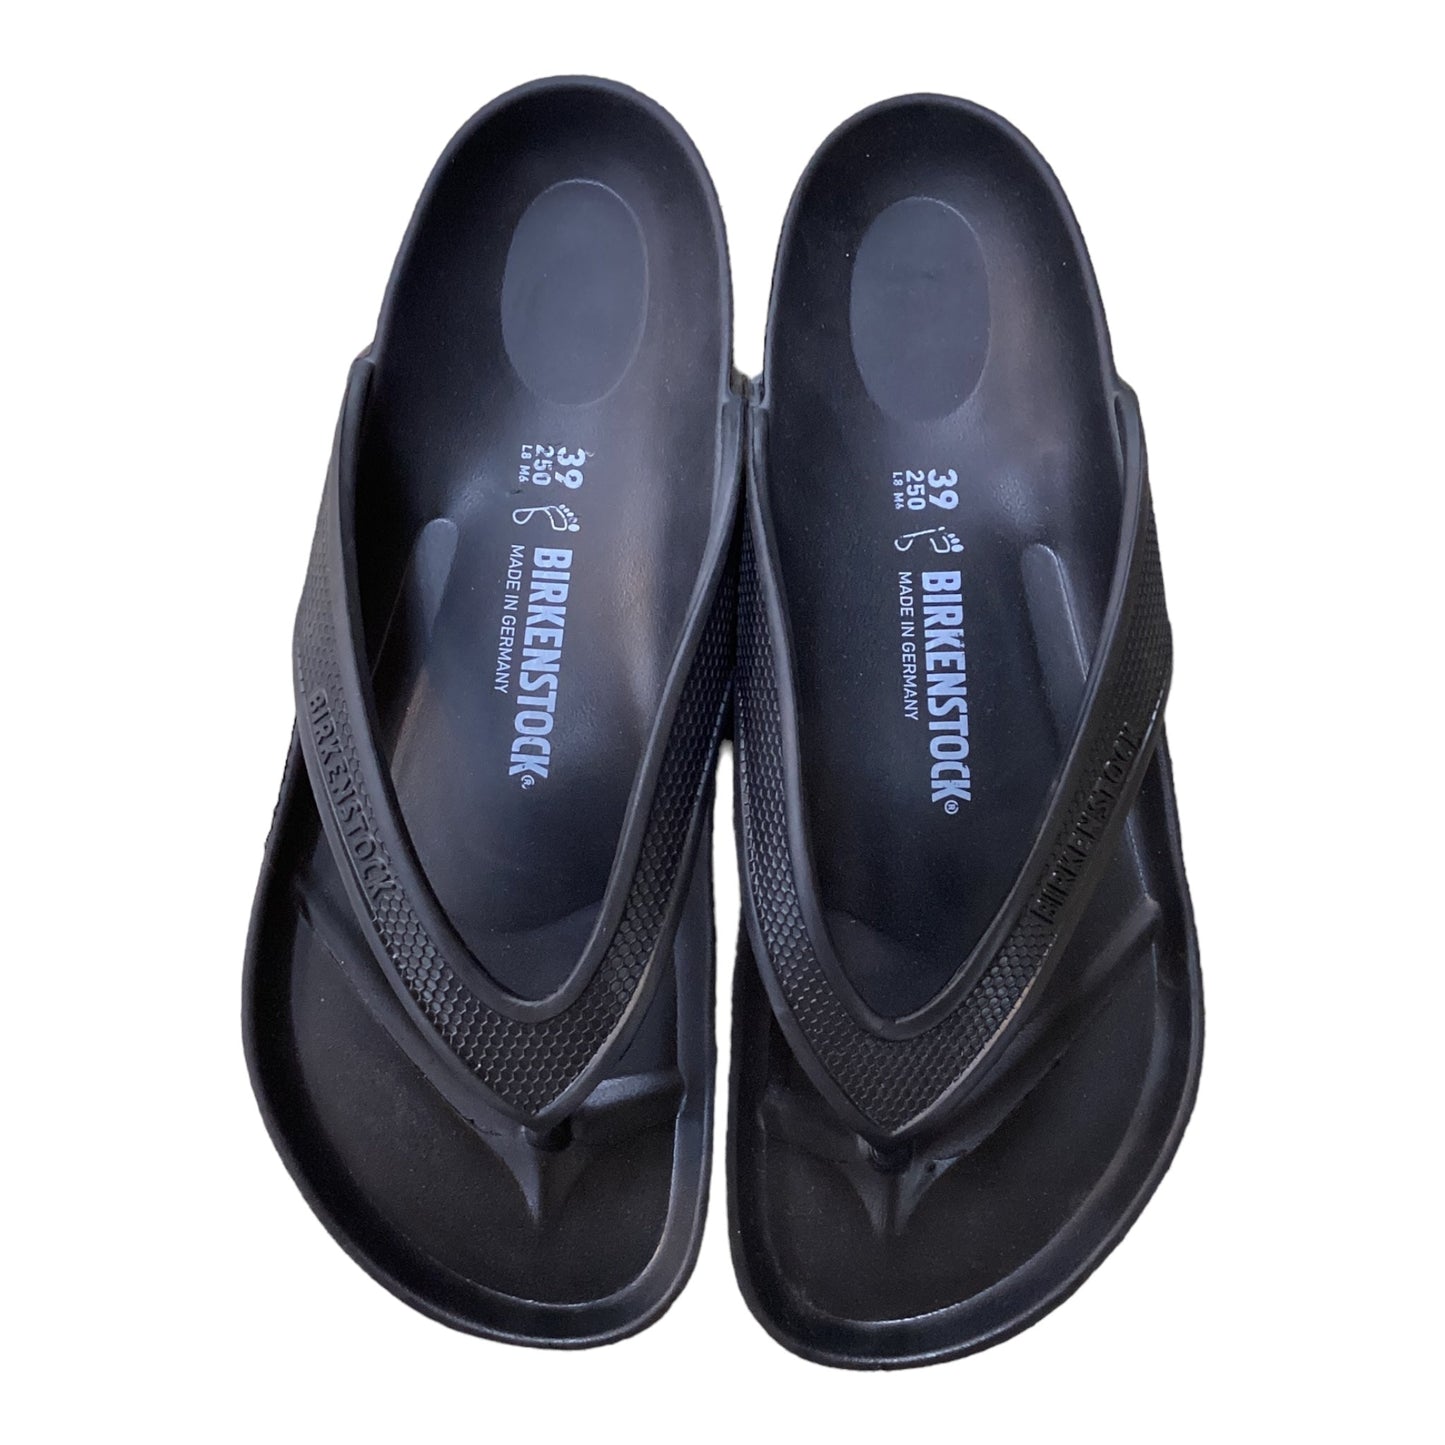 Black Sandals Flip Flops Birkenstock, Size 8